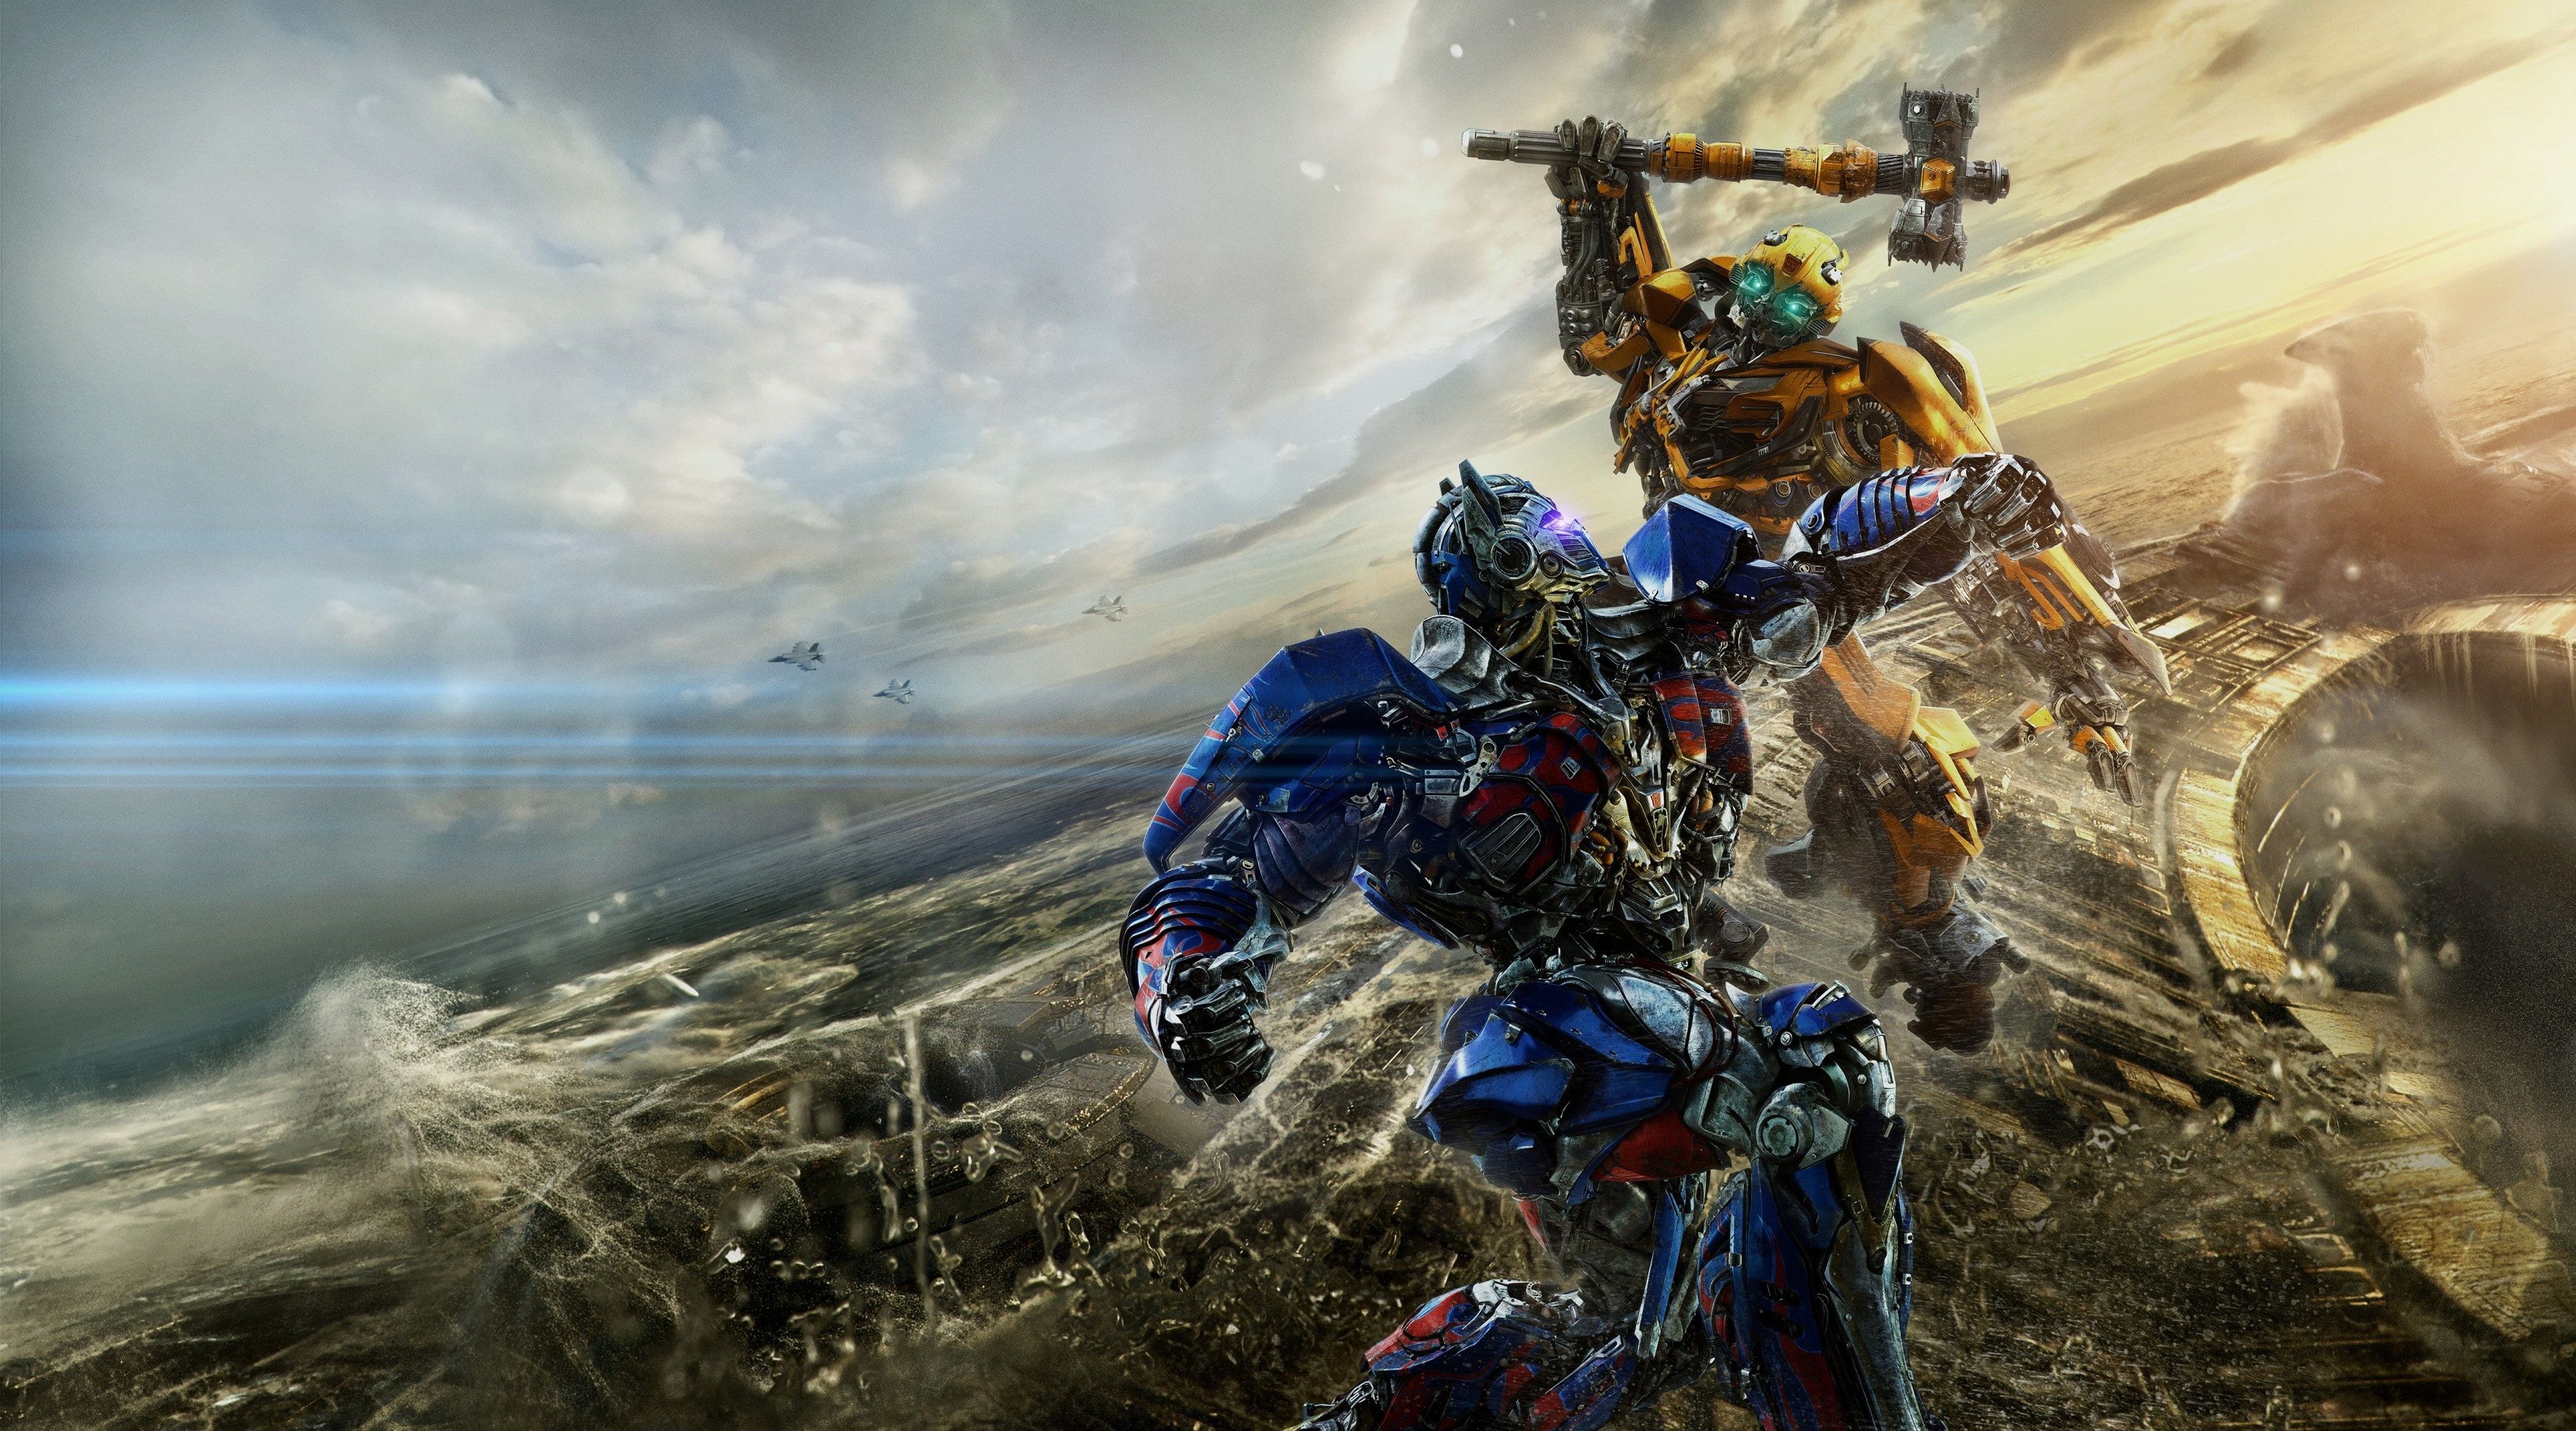 Bumblebee vs Optimus Prime Transformers The..., Transformer: The Last Knight digital wallpaper